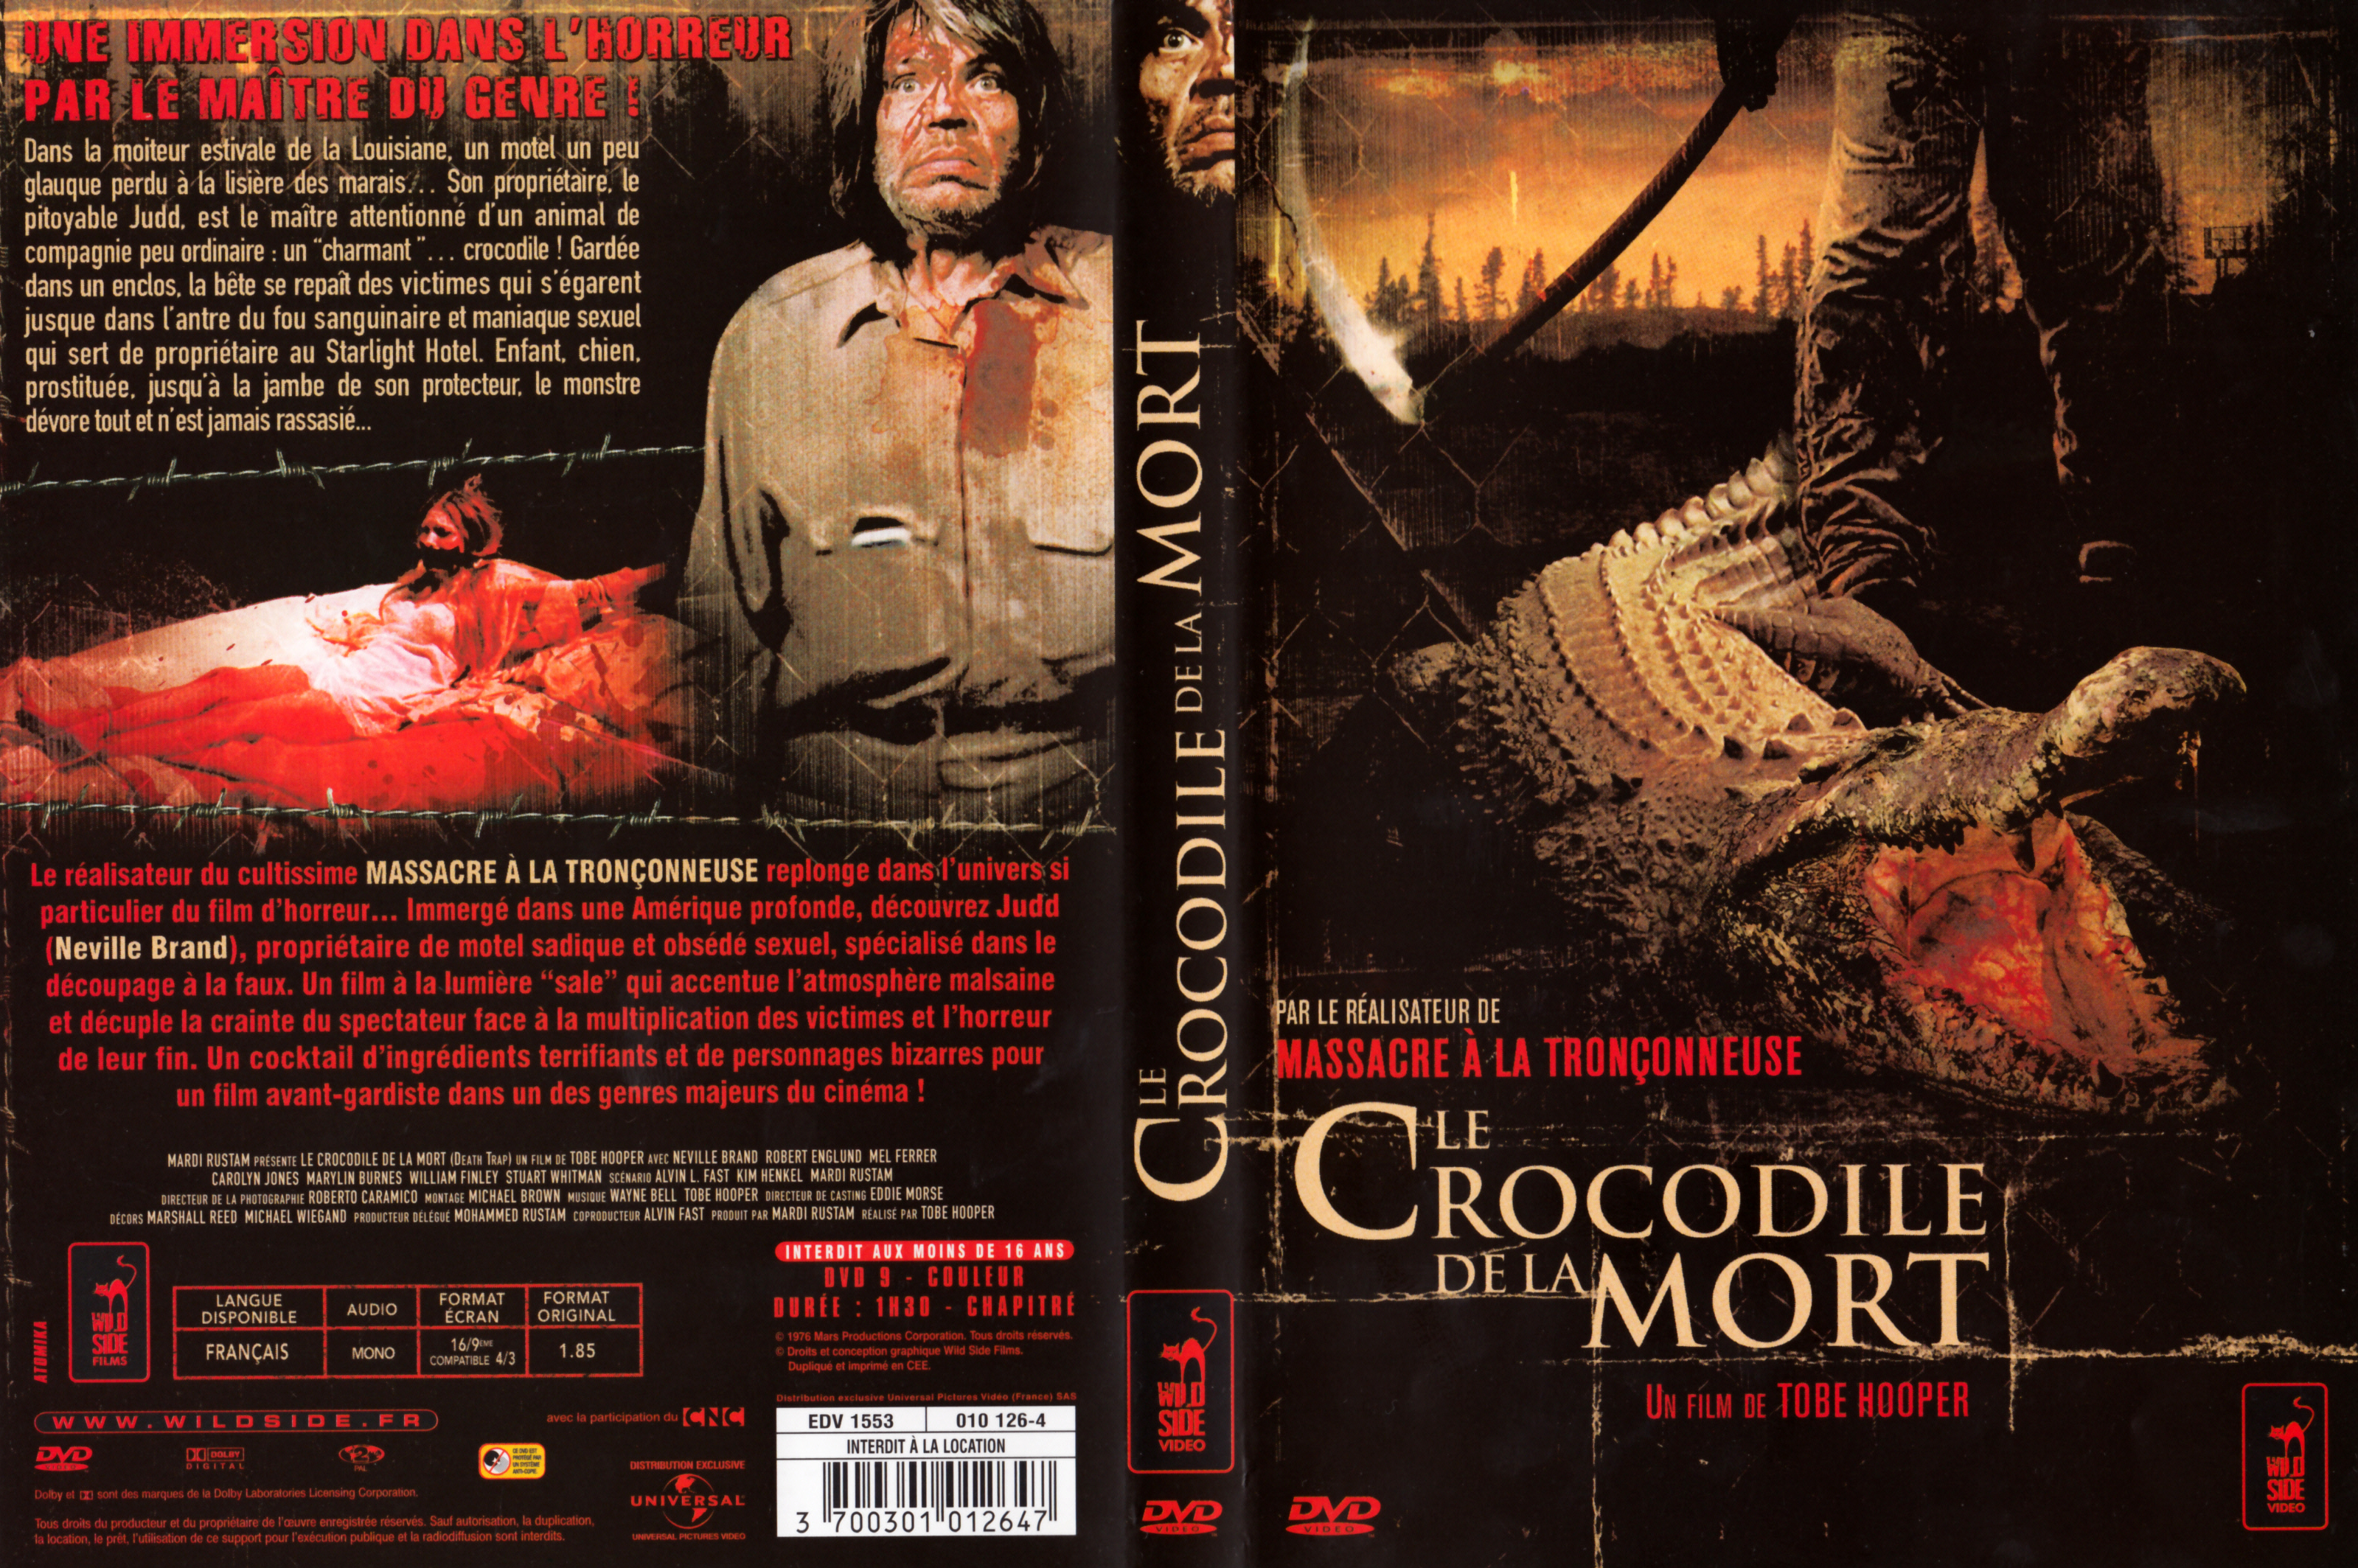 Jaquette DVD Le Crocodile de la mort v2